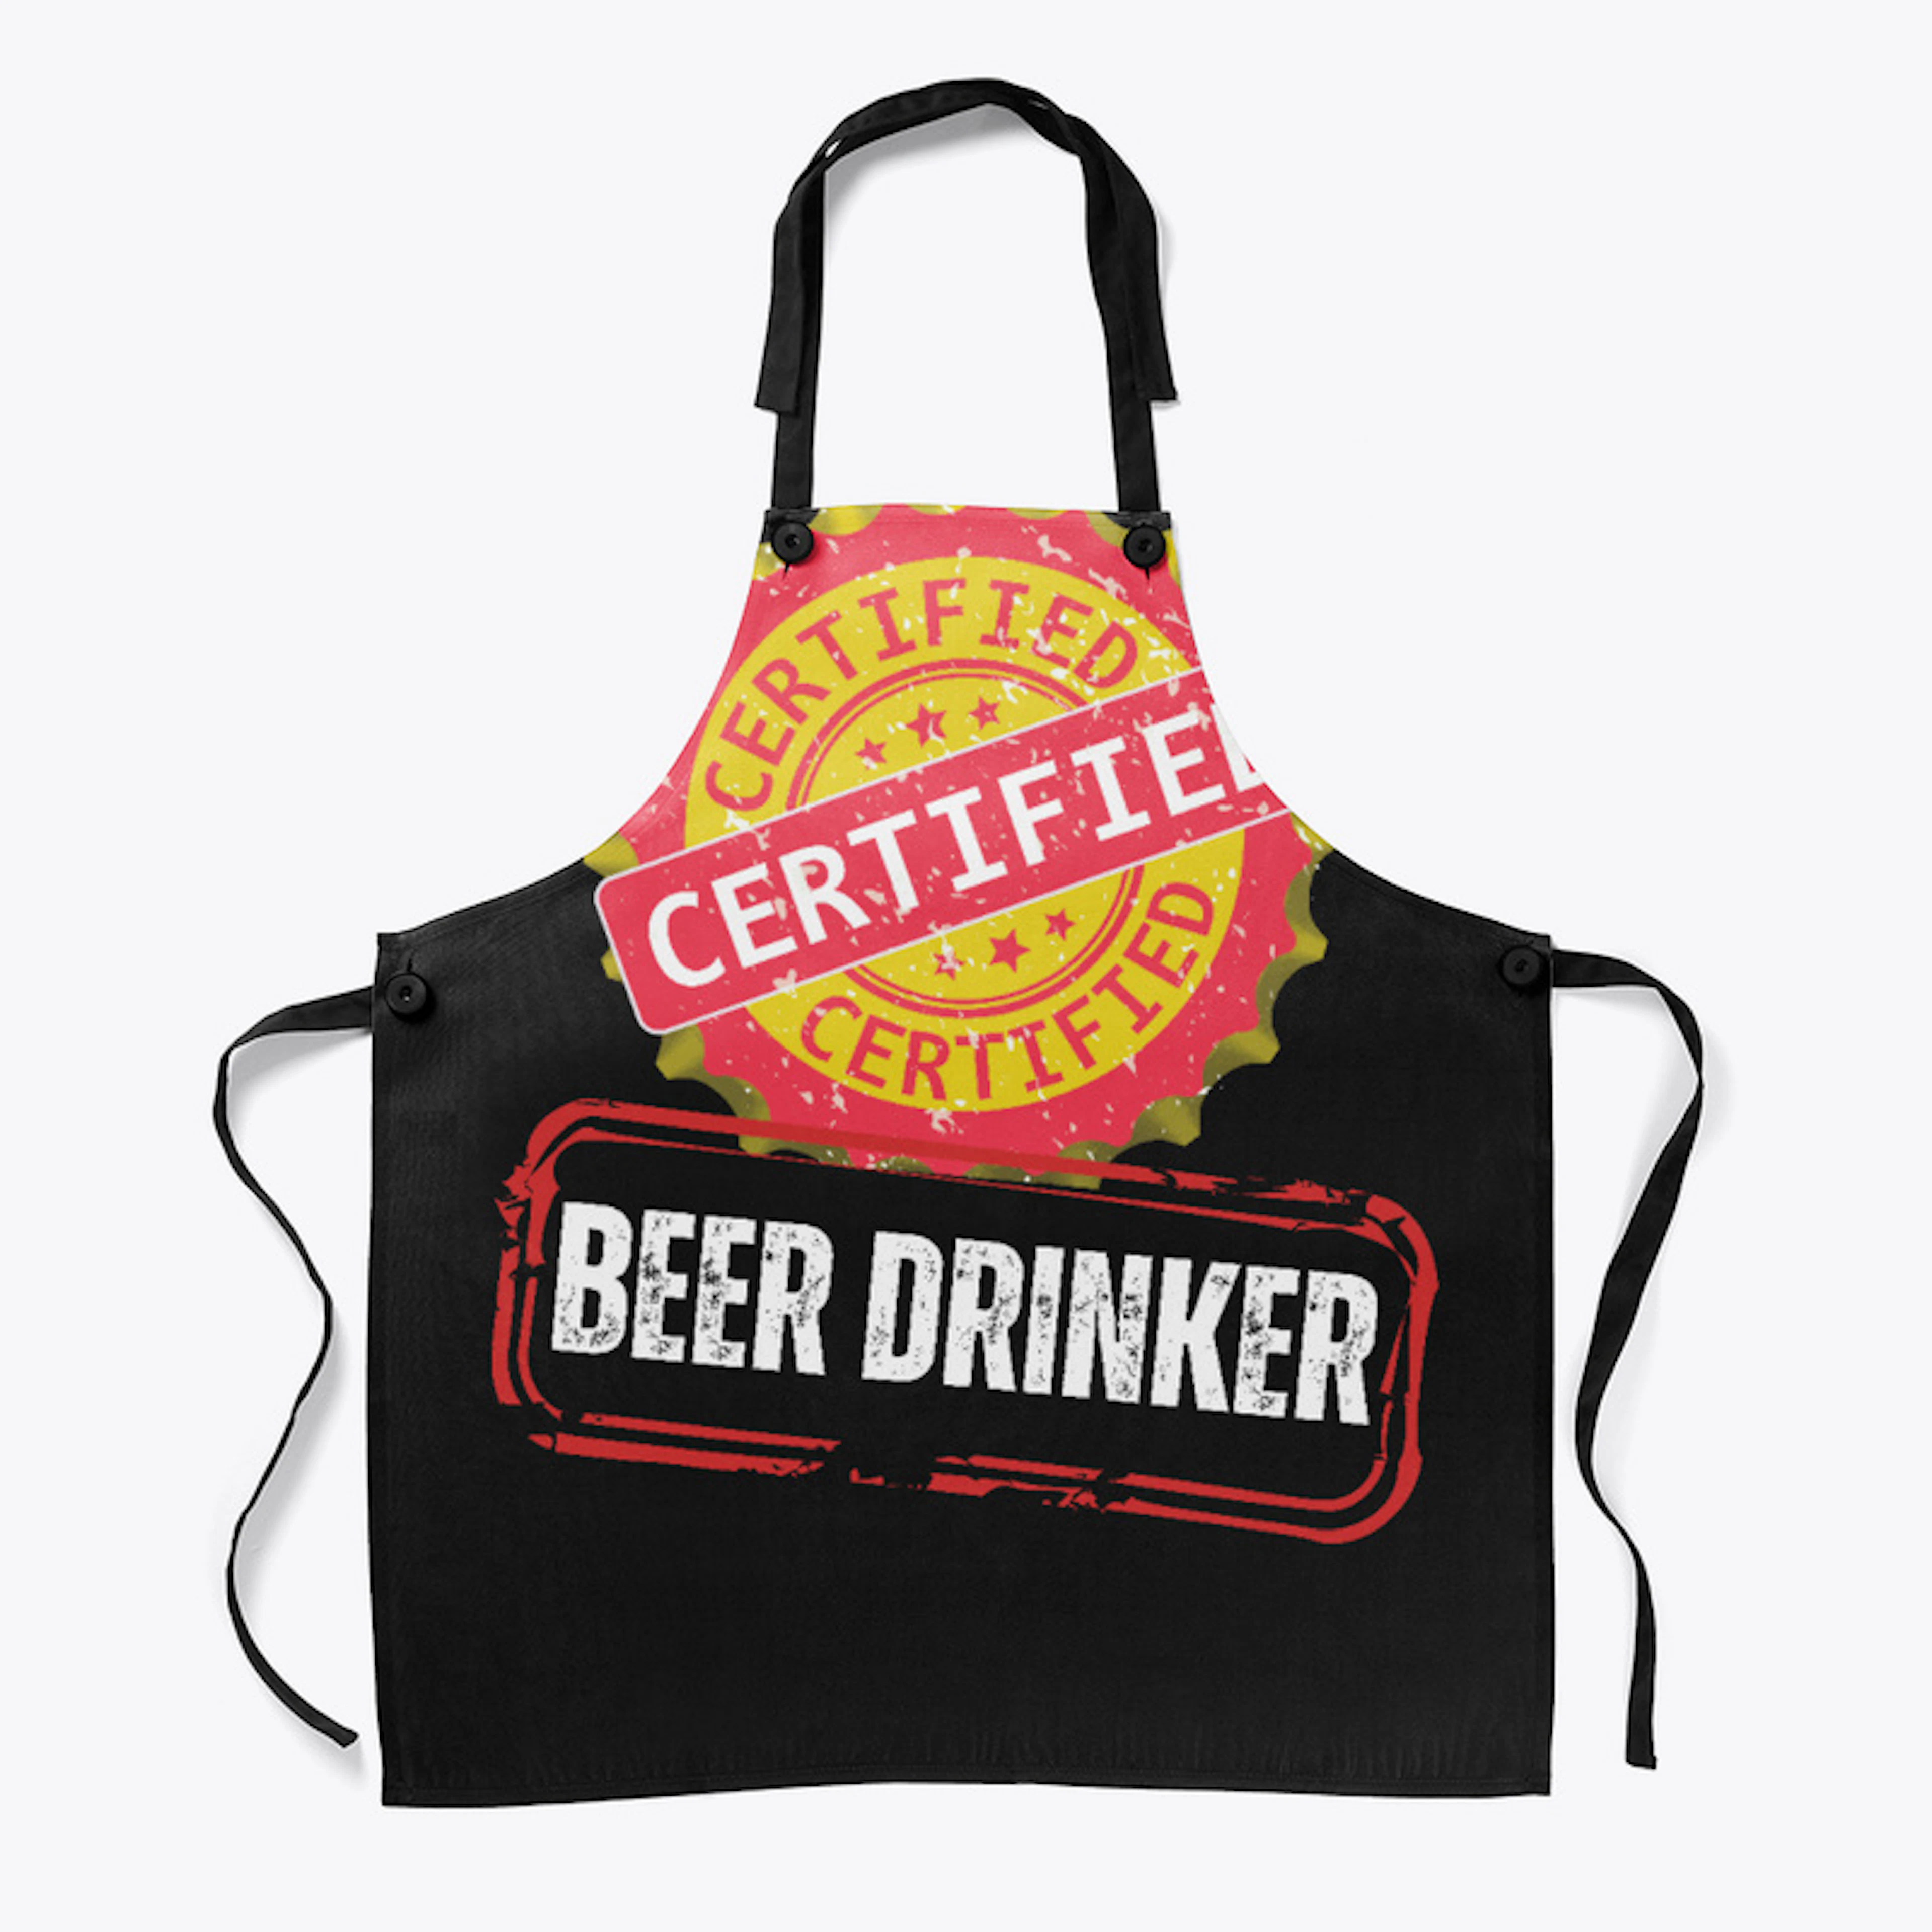 Certified Beer Drinker